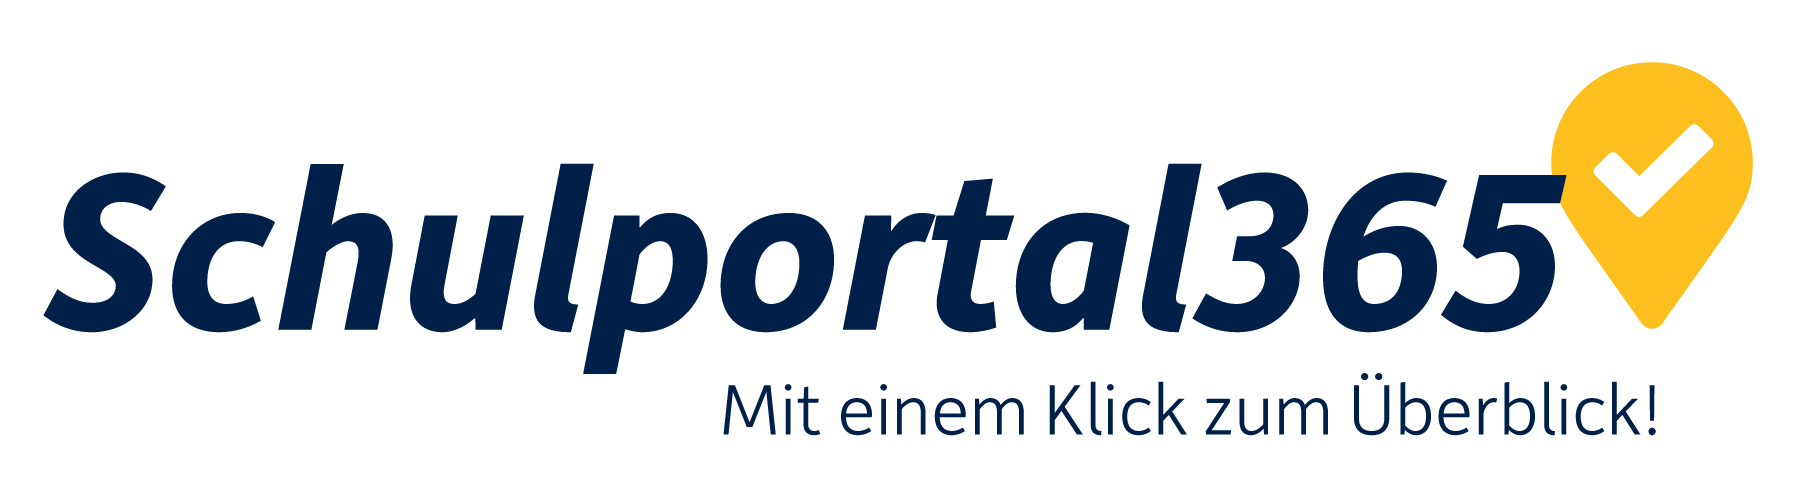 Schulportal365 Logo